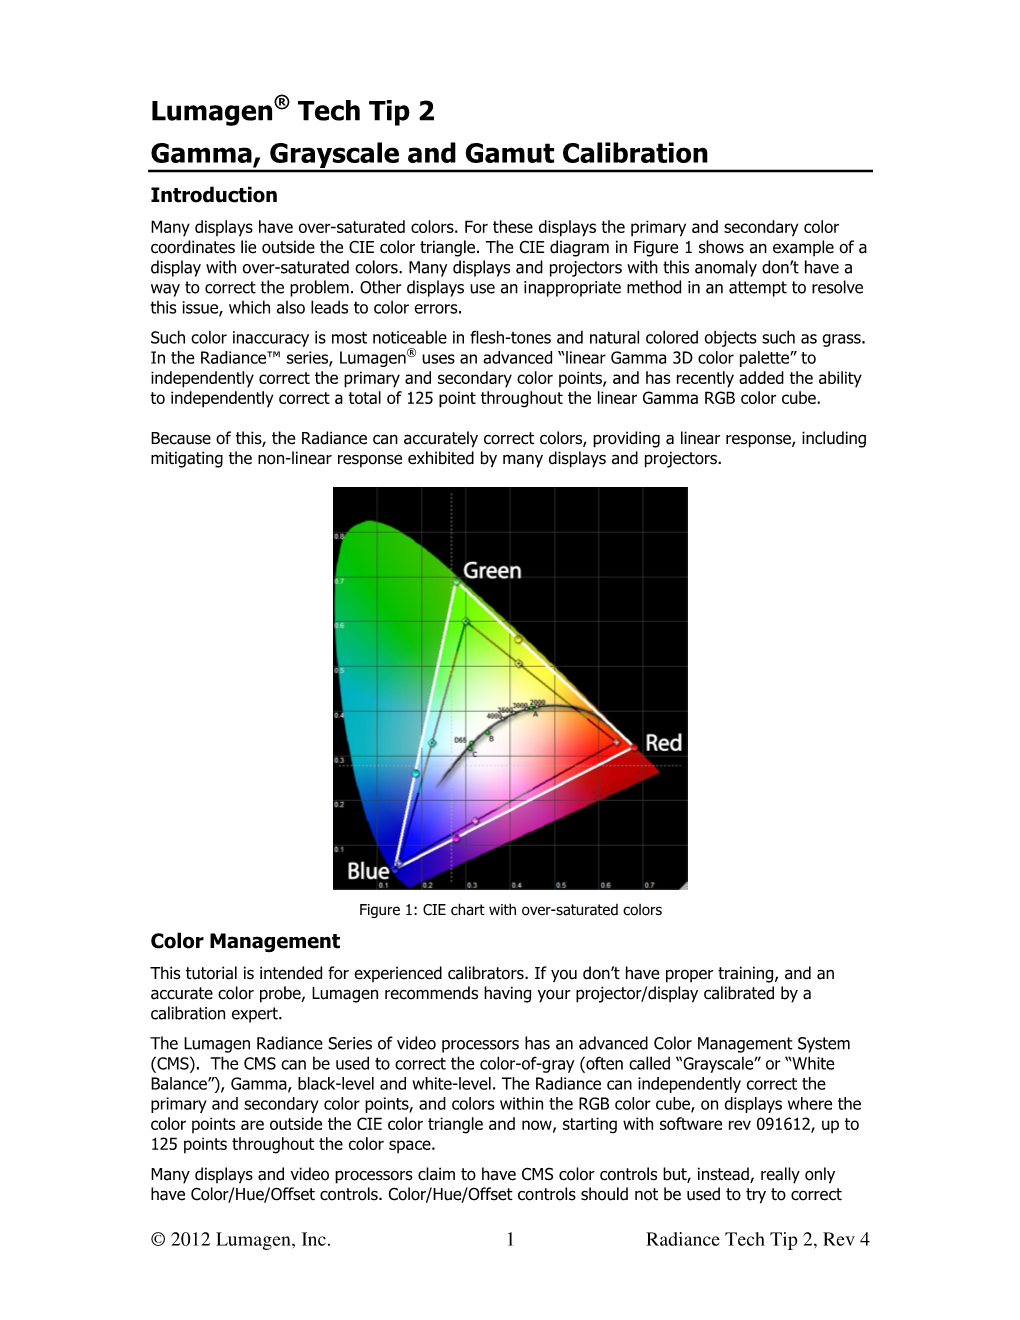 Lumagen Tech Tip 2 Gamma, Grayscale and Gamut Calibration